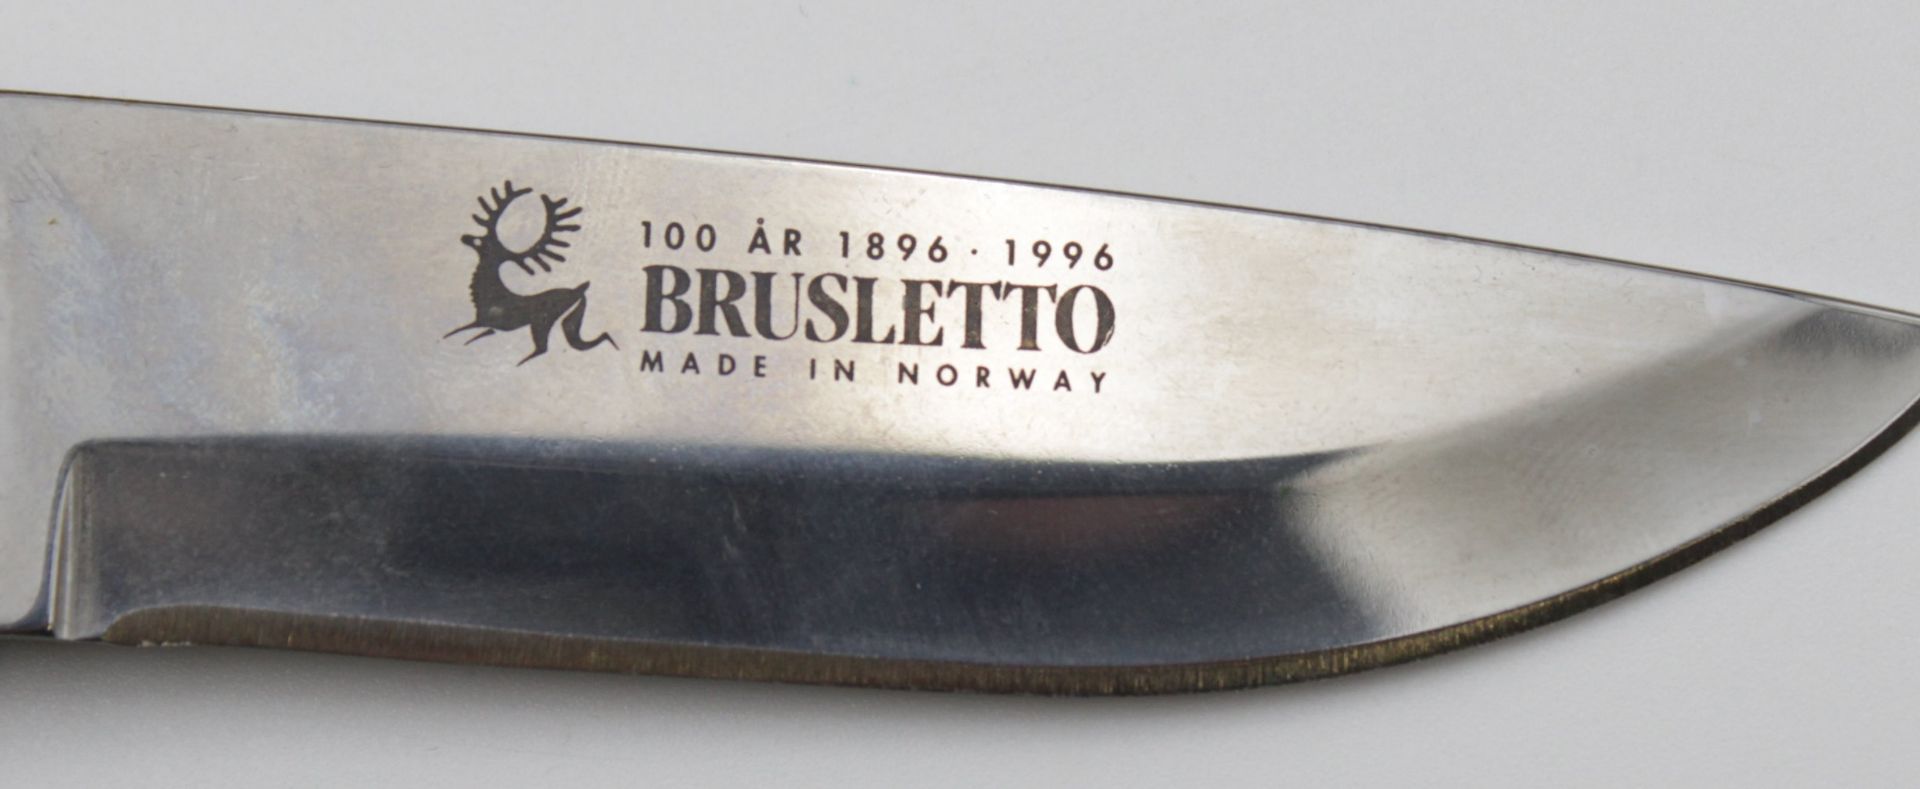 Jagdmesser in orig. Etui, Brusletto Norway, ca. L-20cm. - Bild 4 aus 5